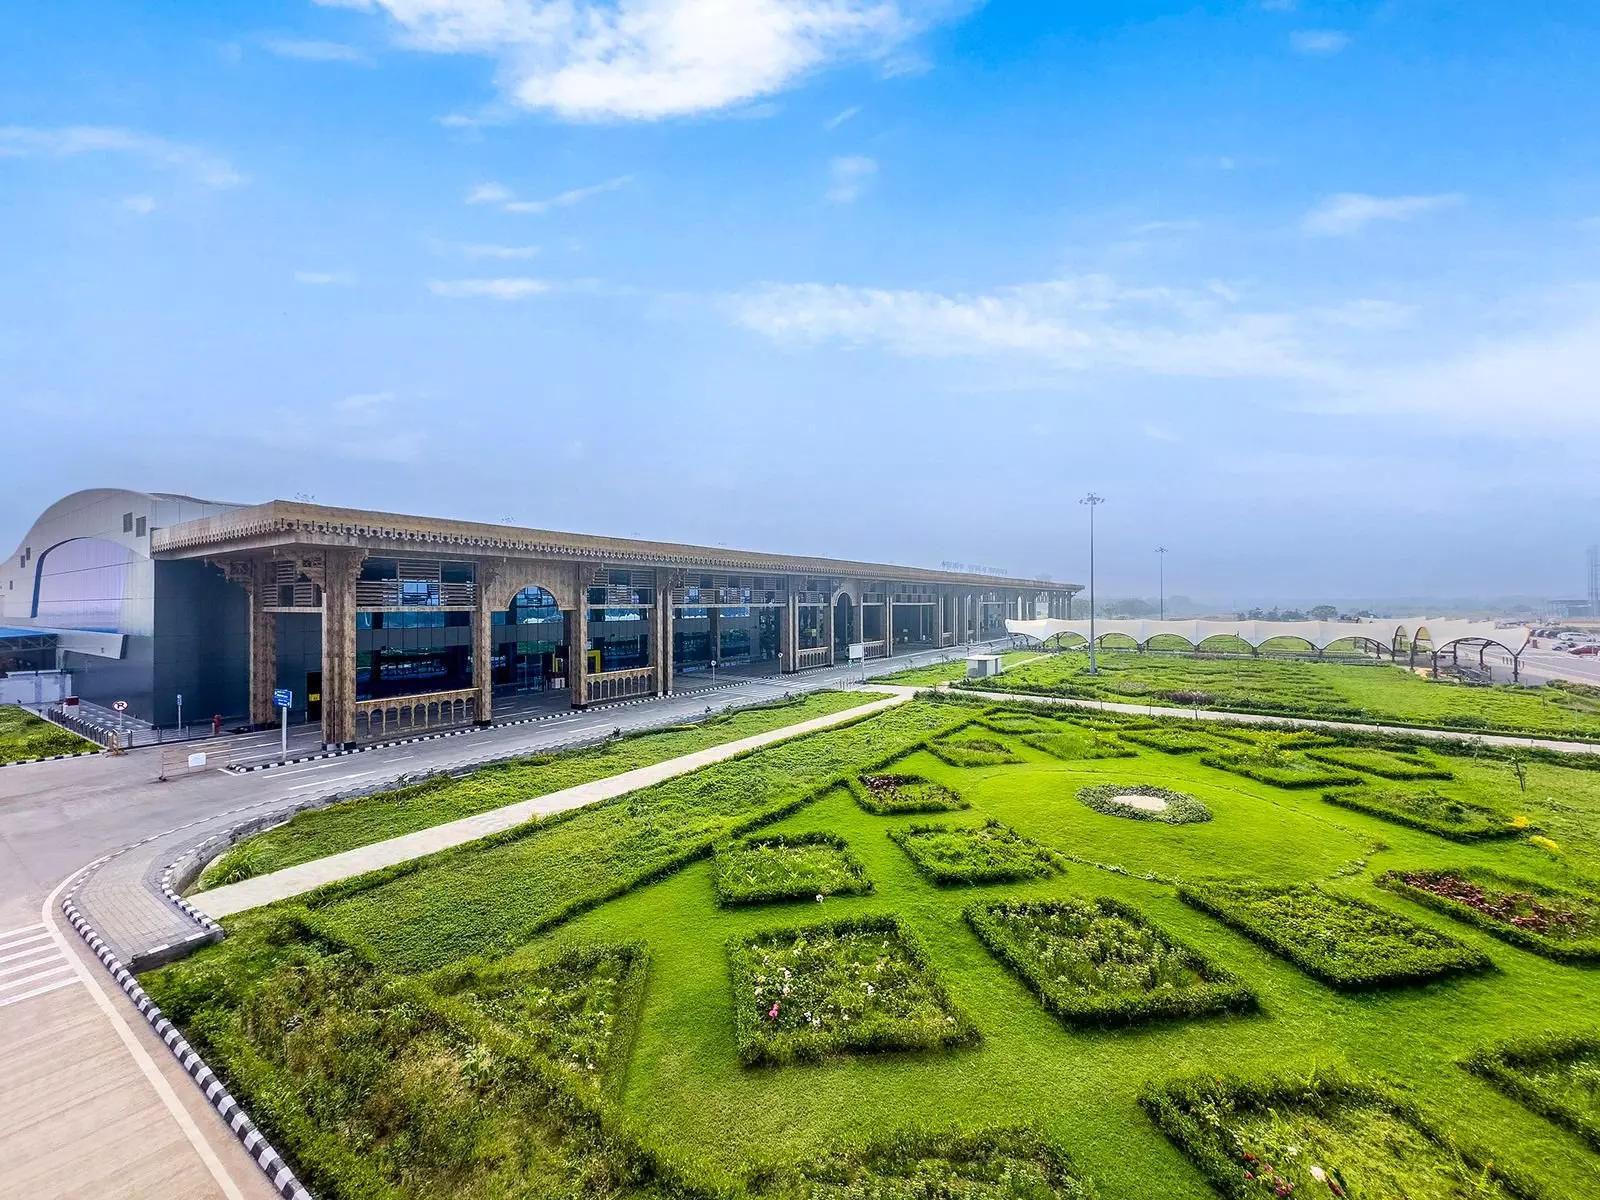 PM Modi inaugurates new terminal building of Surat airport